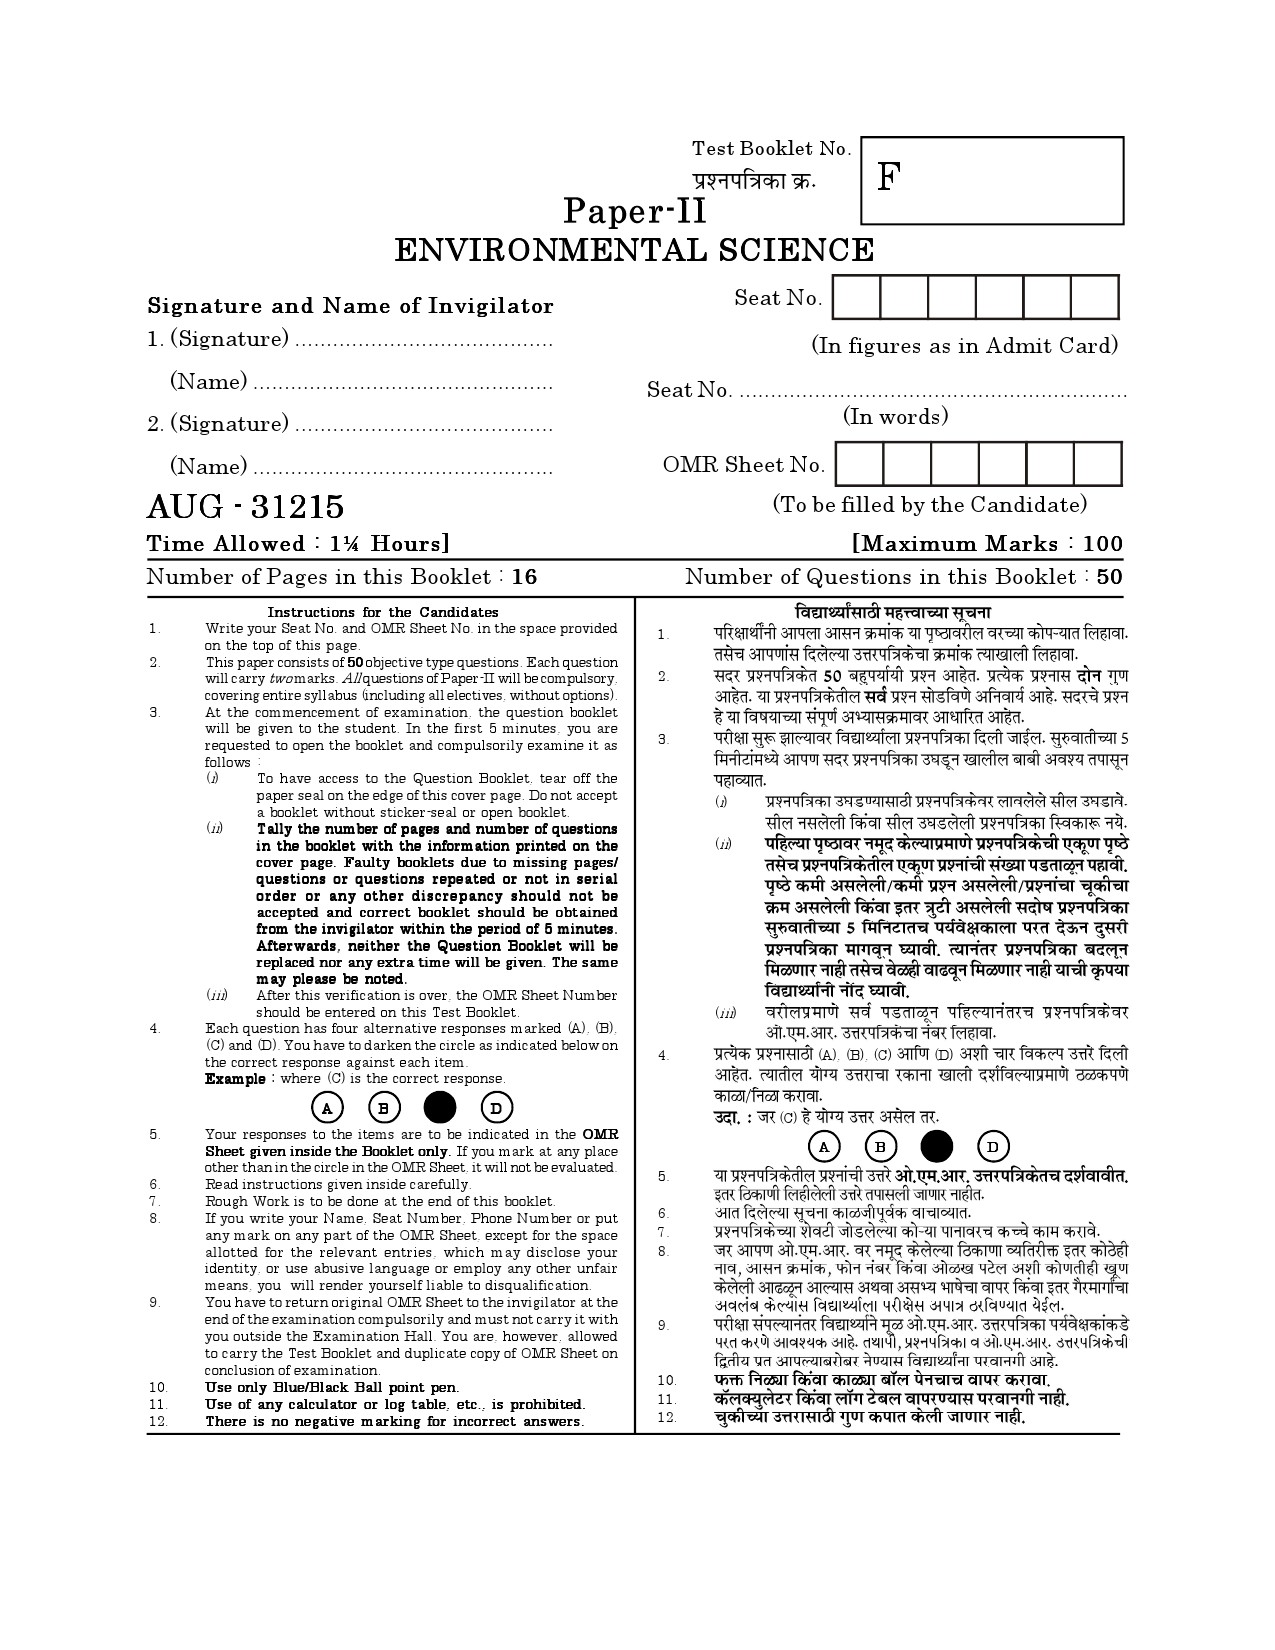 Maharashtra SET Environmental Sciences Question Paper II August 2015 1